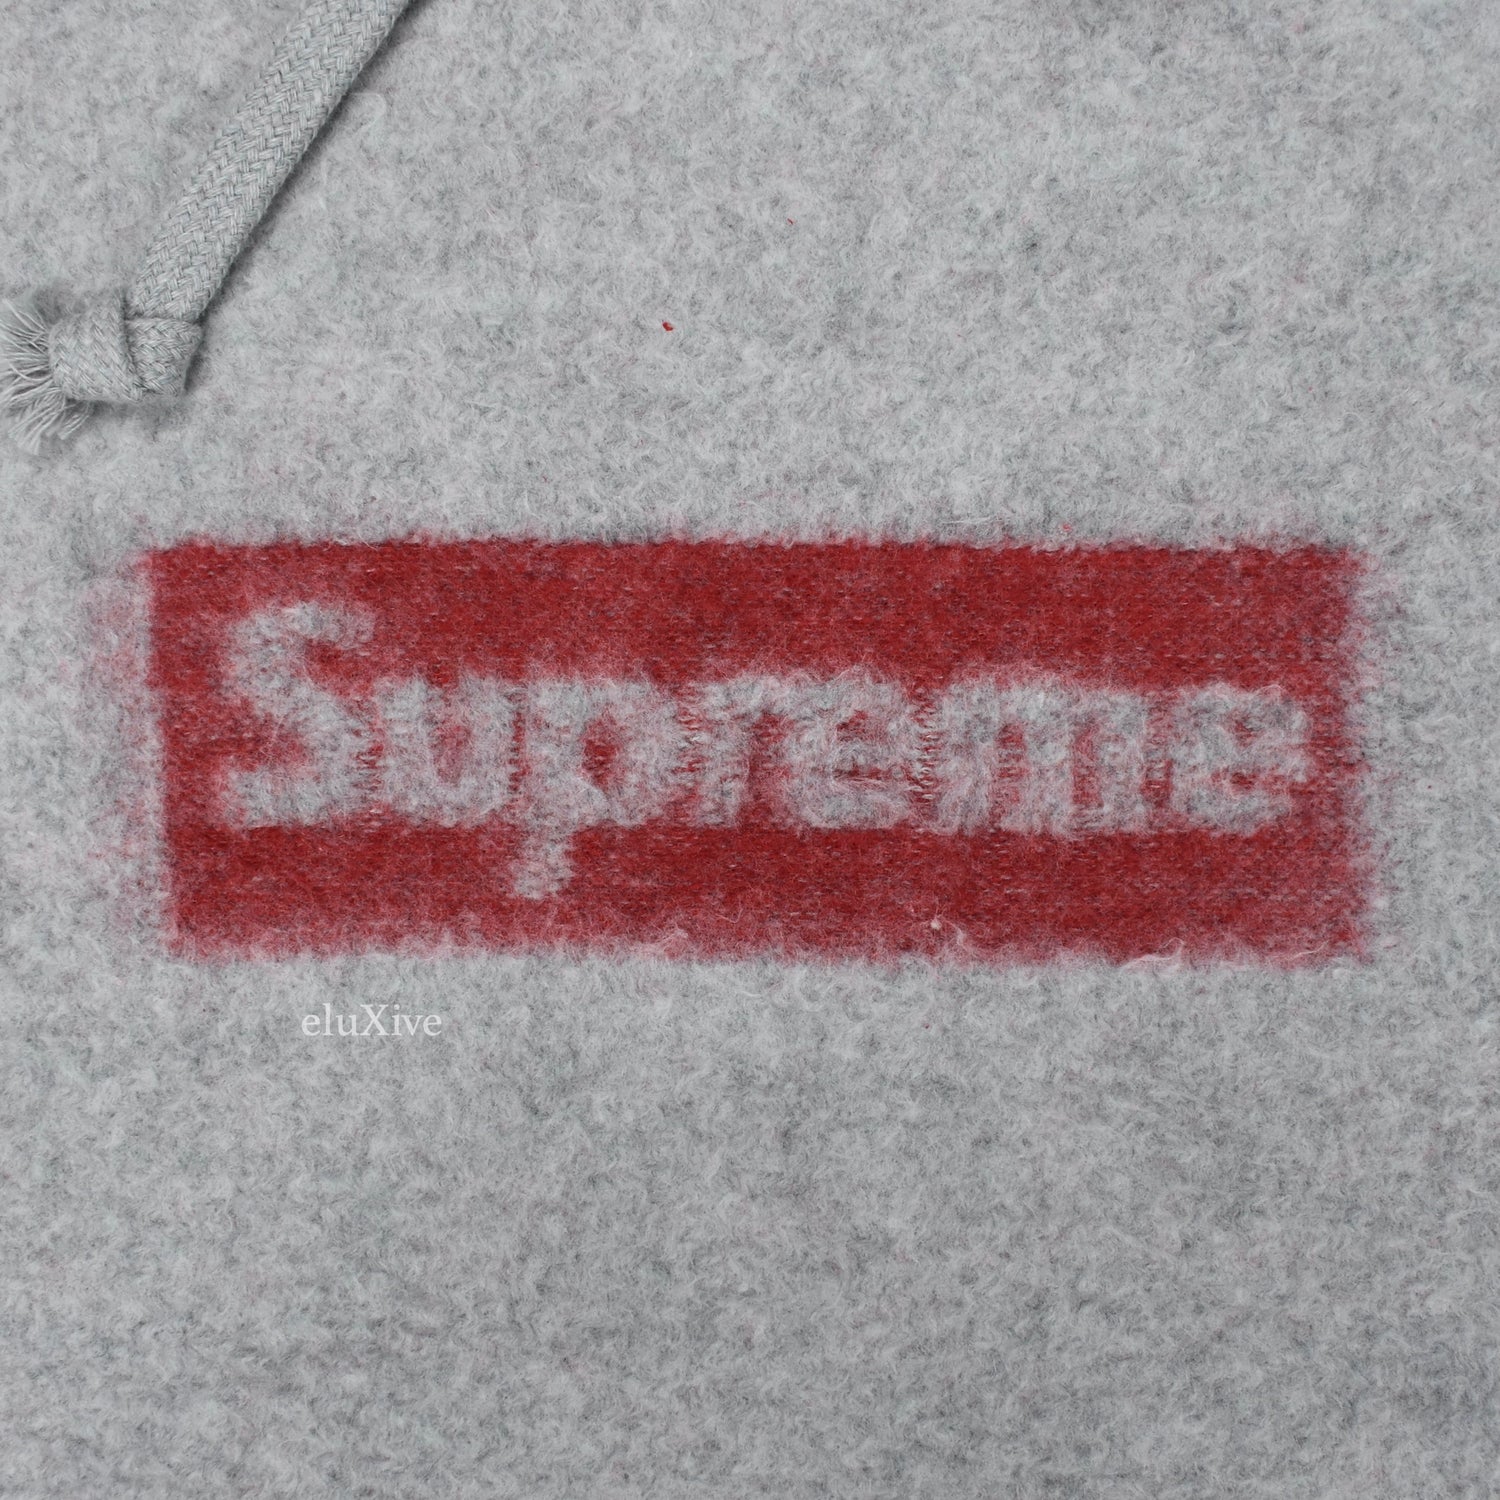 Supreme Inside Out Box Logo Hooded Sweatshirt